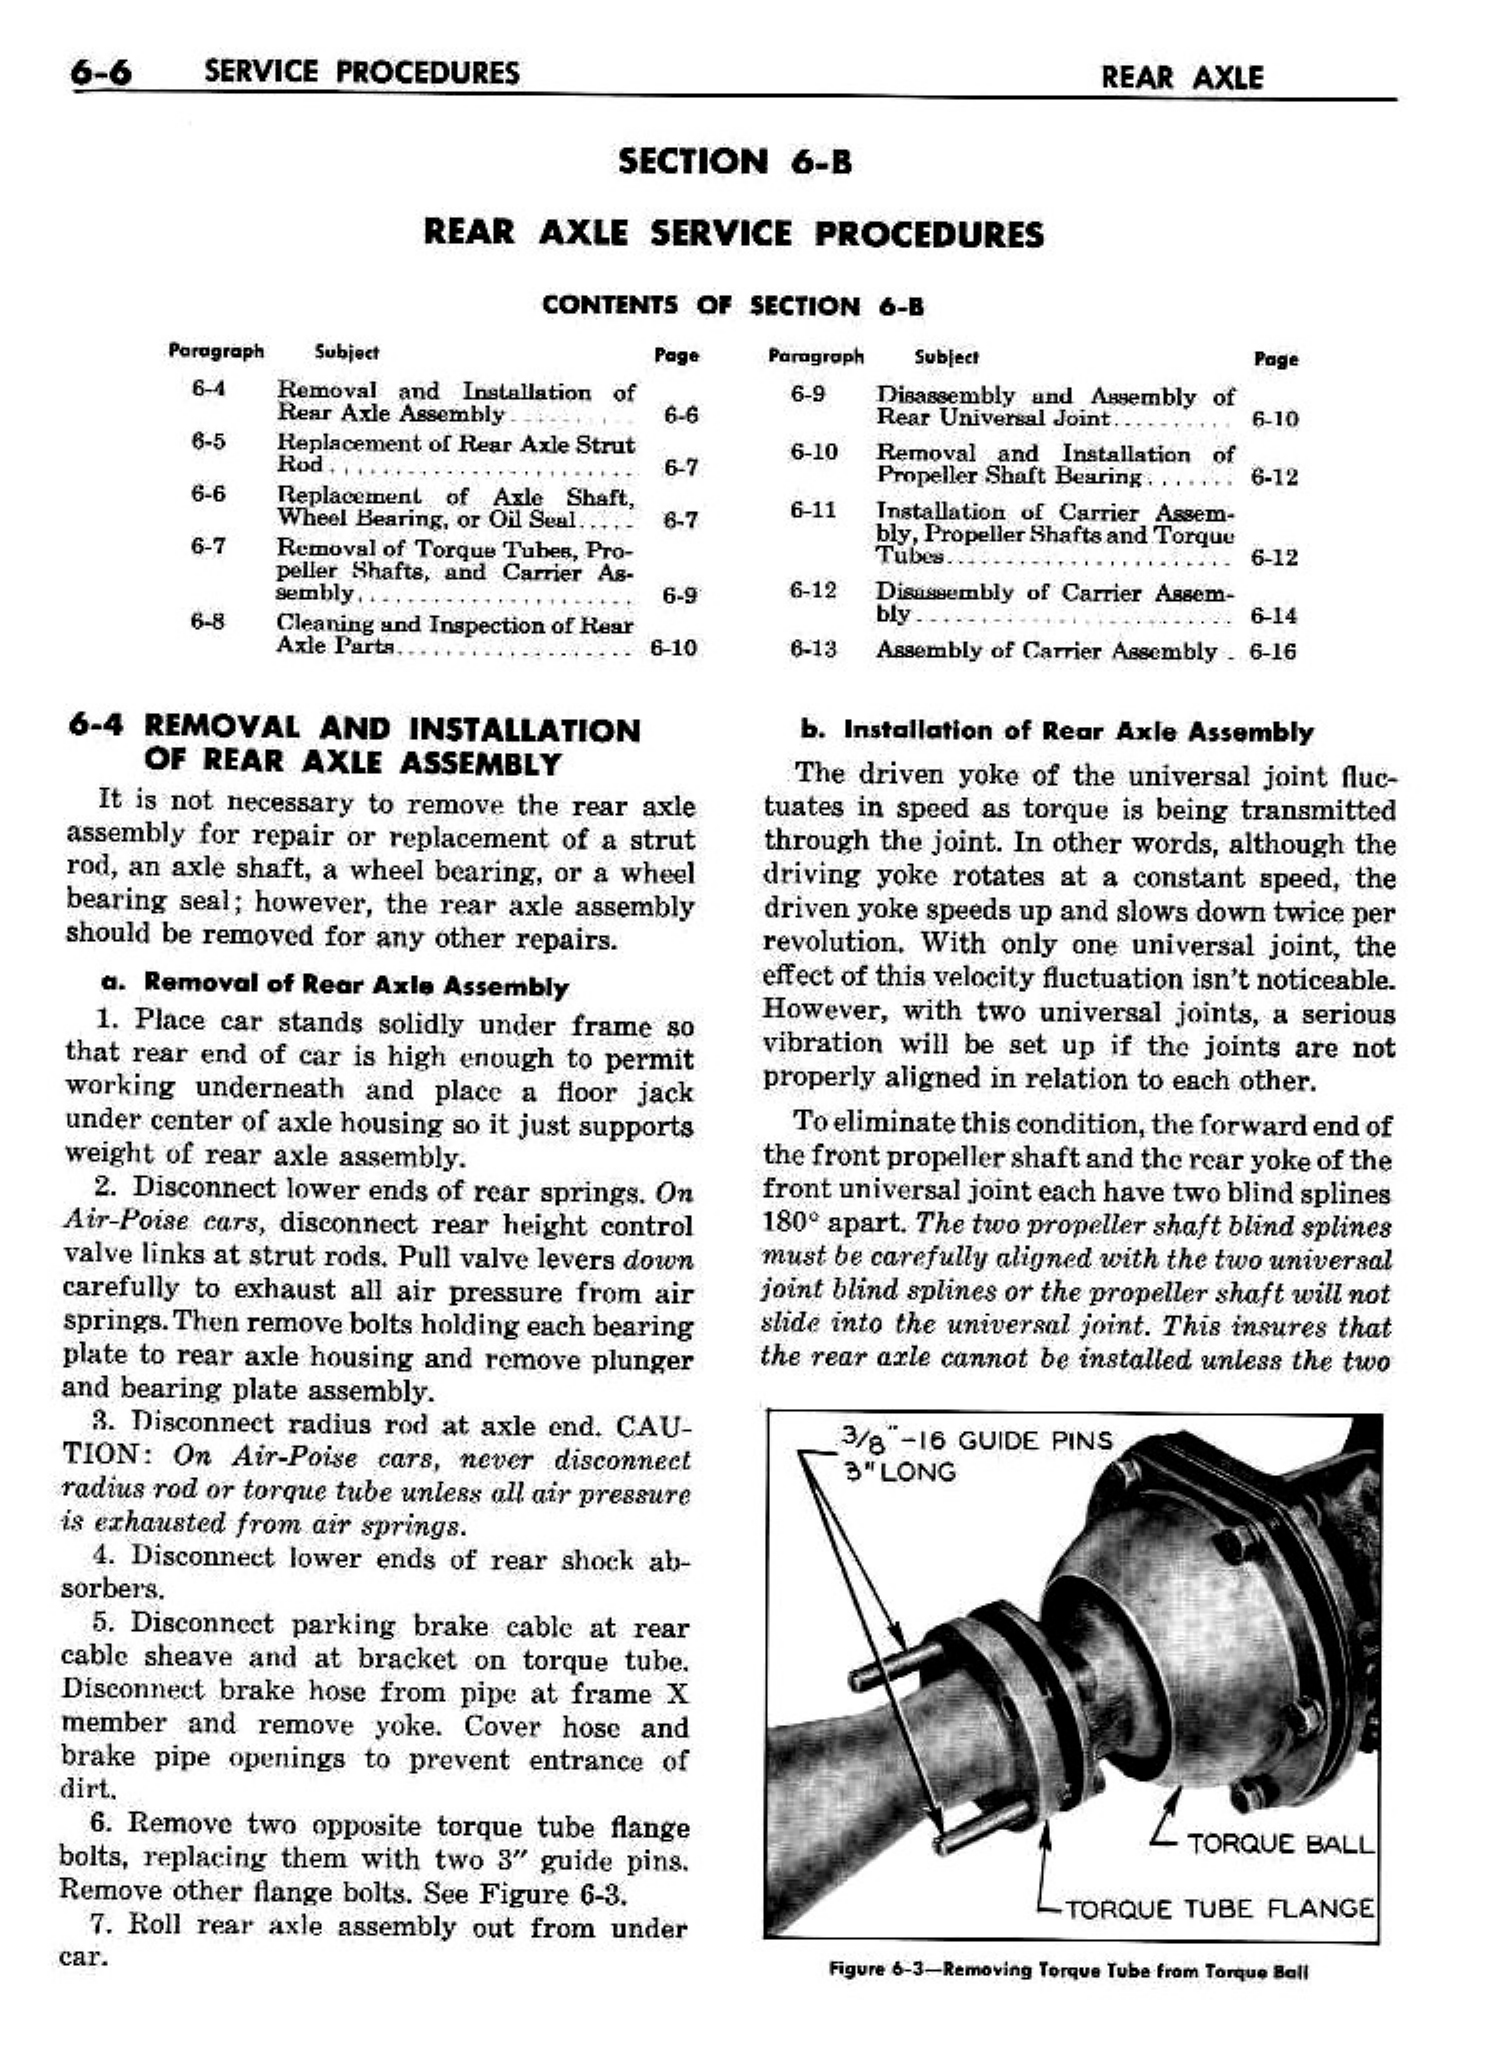 n_07 1958 Buick Shop Manual - Rear Axle_6.jpg